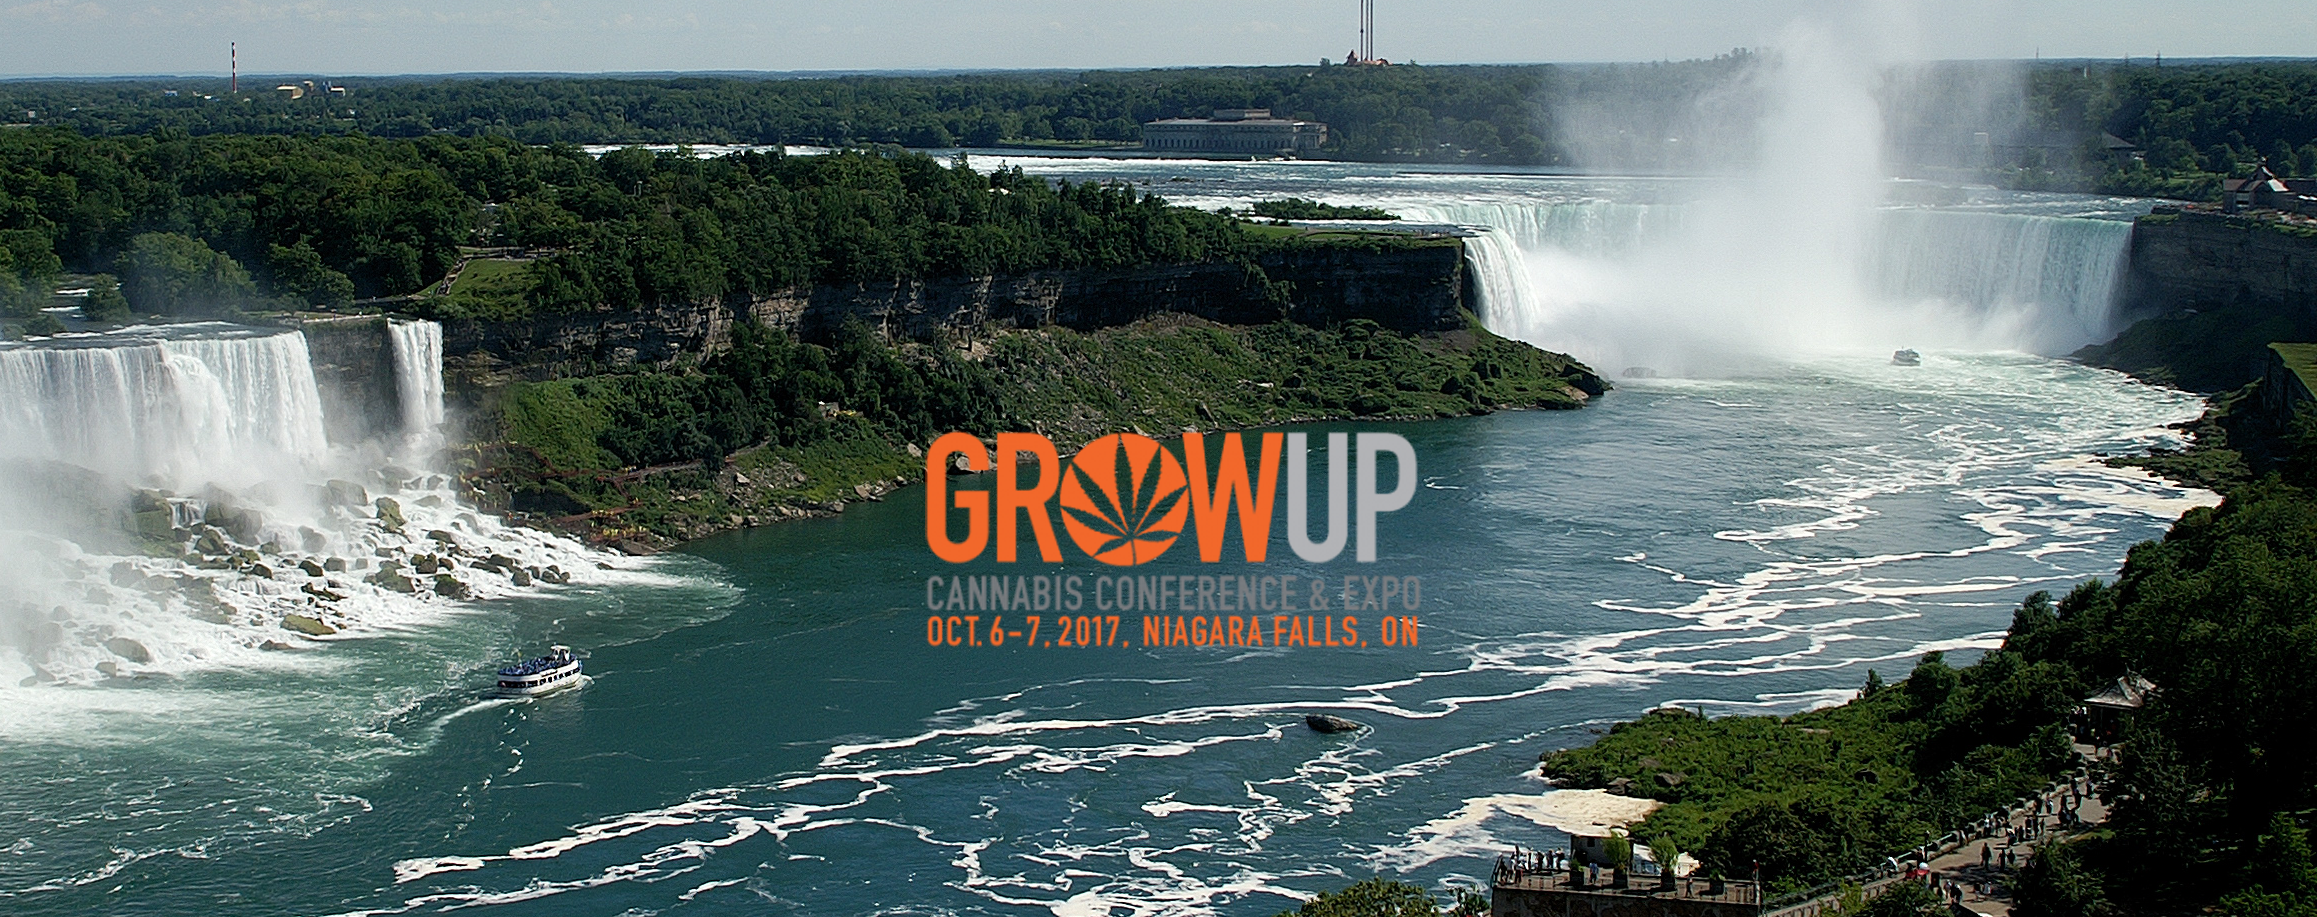 Grow Up Cannabis Conference & Expo, Niagara Falls 2017